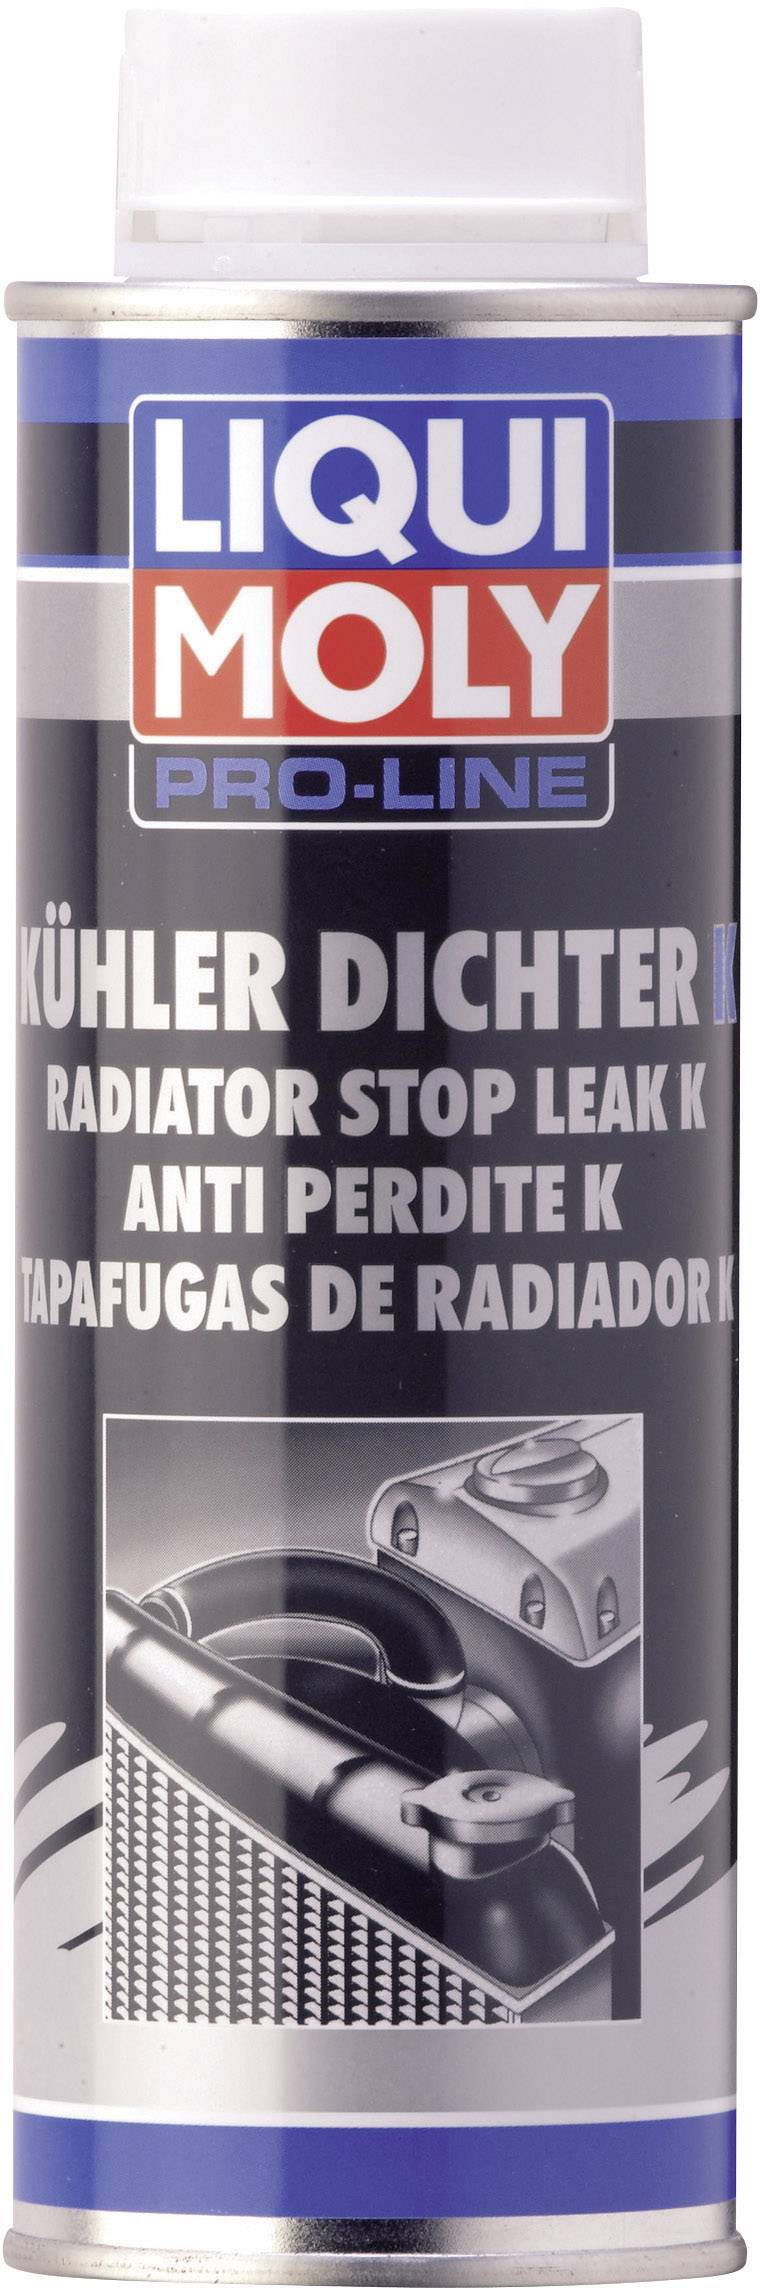 Liqui Moly Pro-Line Kühler-Dichter K 5178 250 ml kaufen